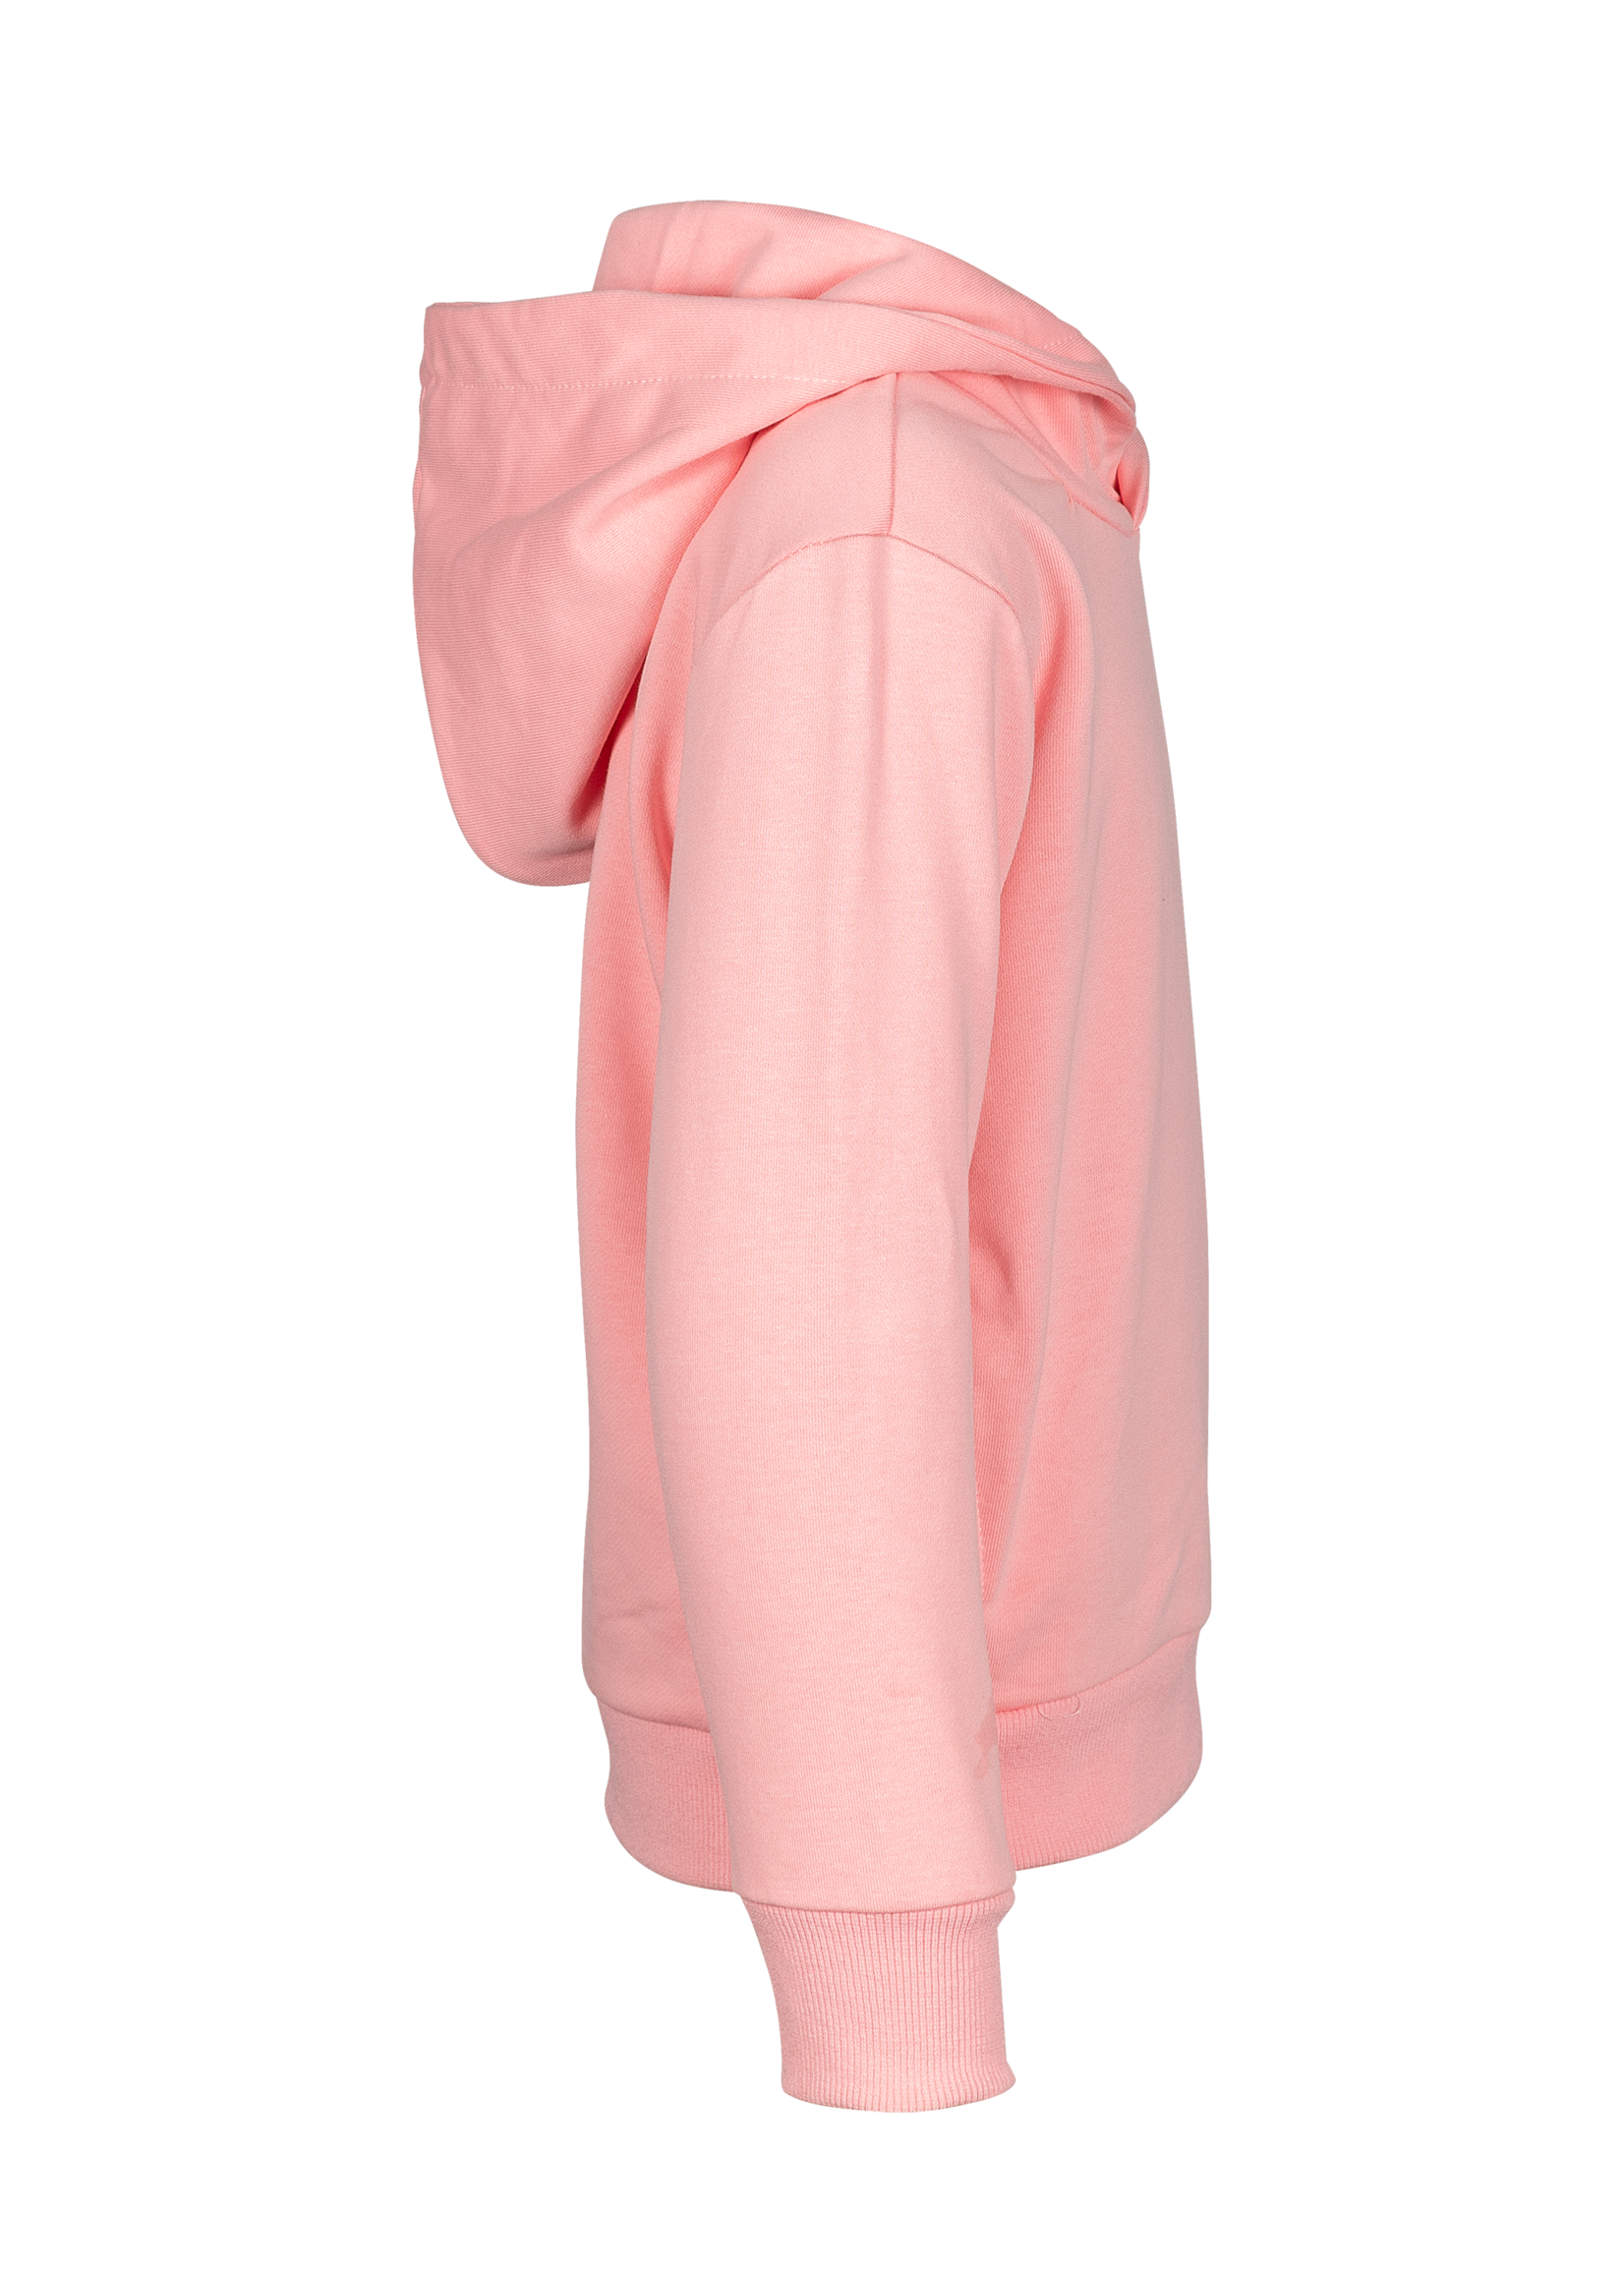 Dutch dream denim KWETU. Girls pink hoodie